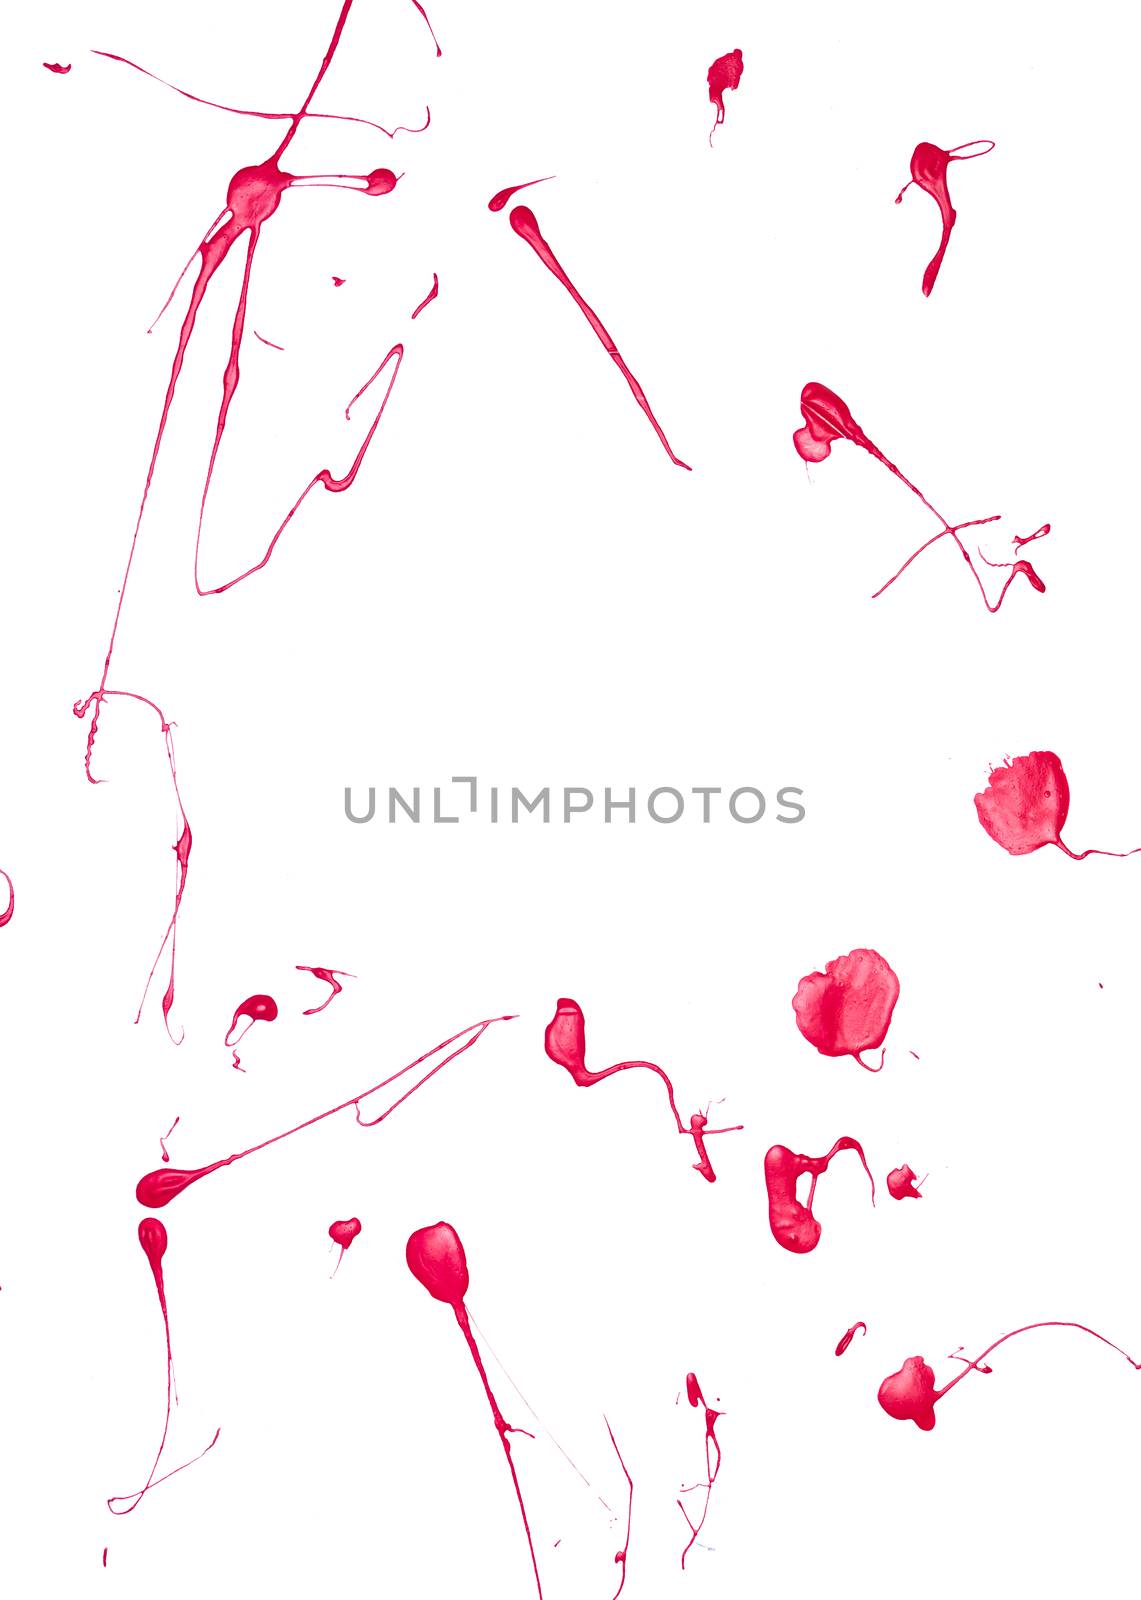 Red Paint Splash by gemenacom